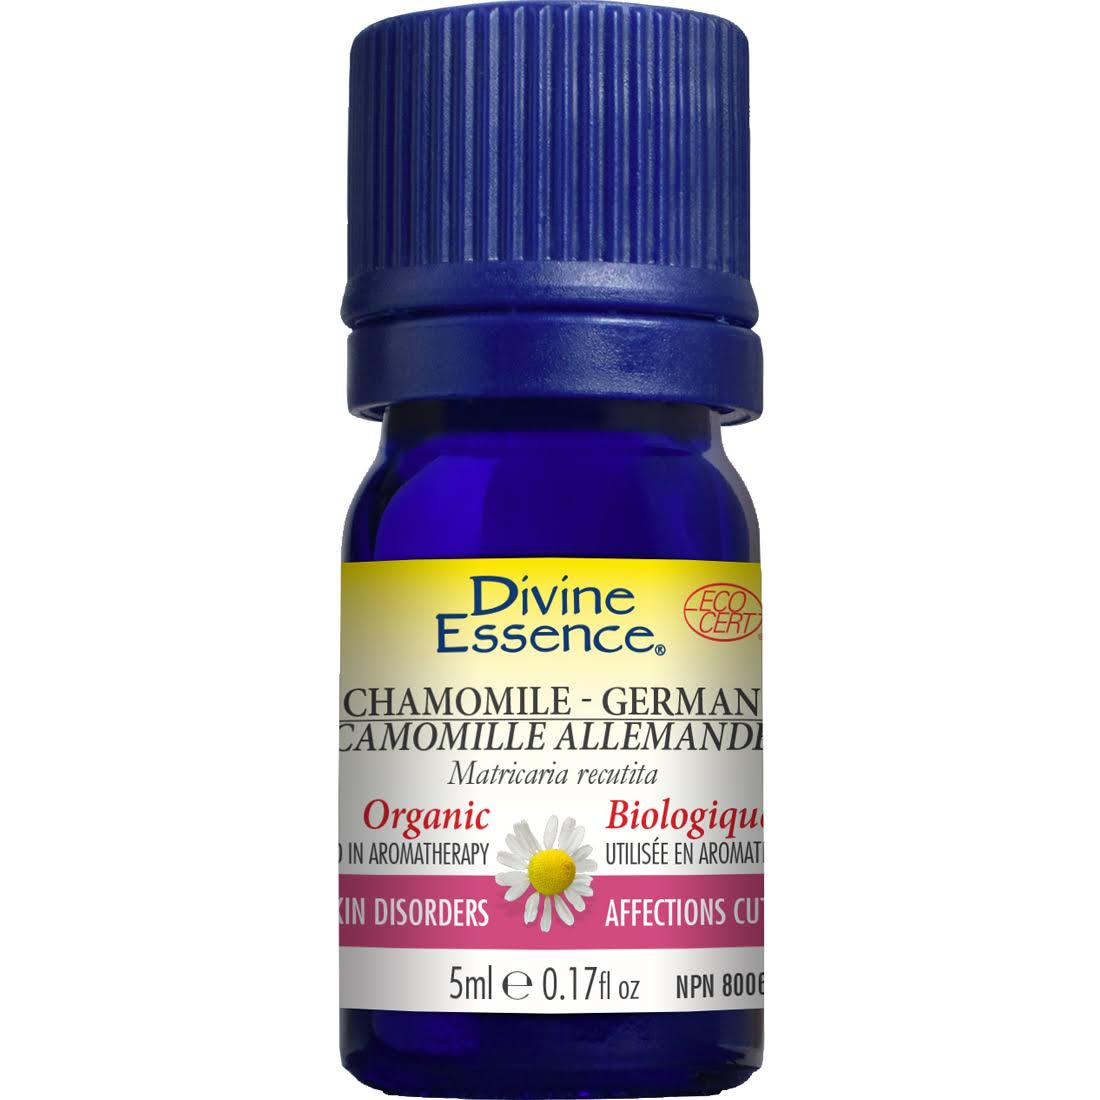 DIVINE ESSENCE Chamomile - German (Organic - 5 ml)